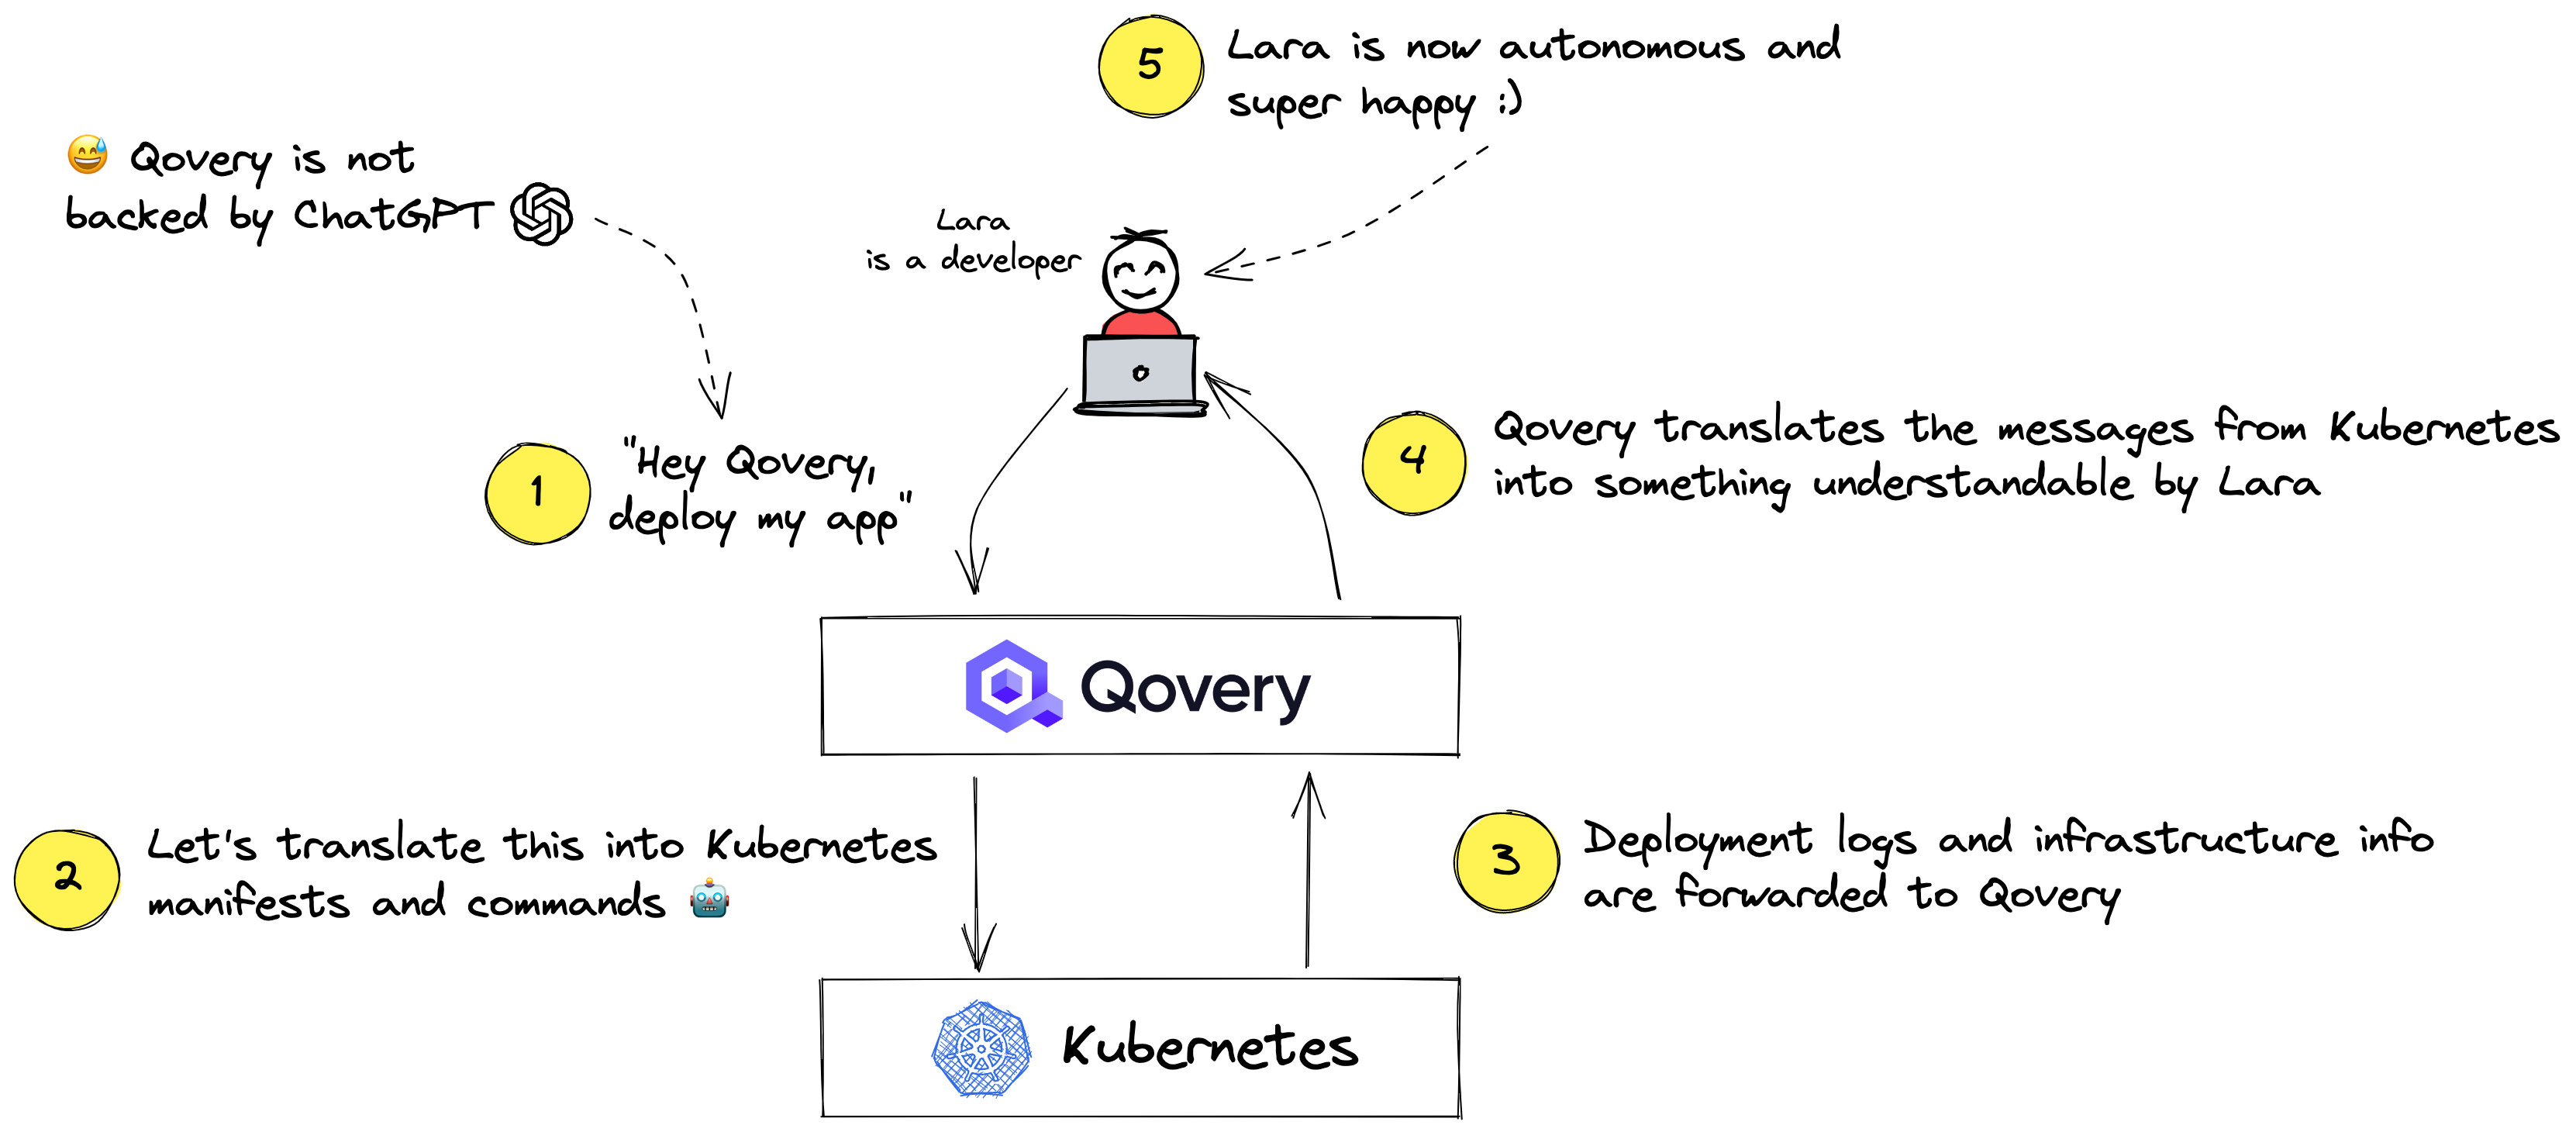 Qovery translates actions from Lara (developer) into native Kubernetes instructions